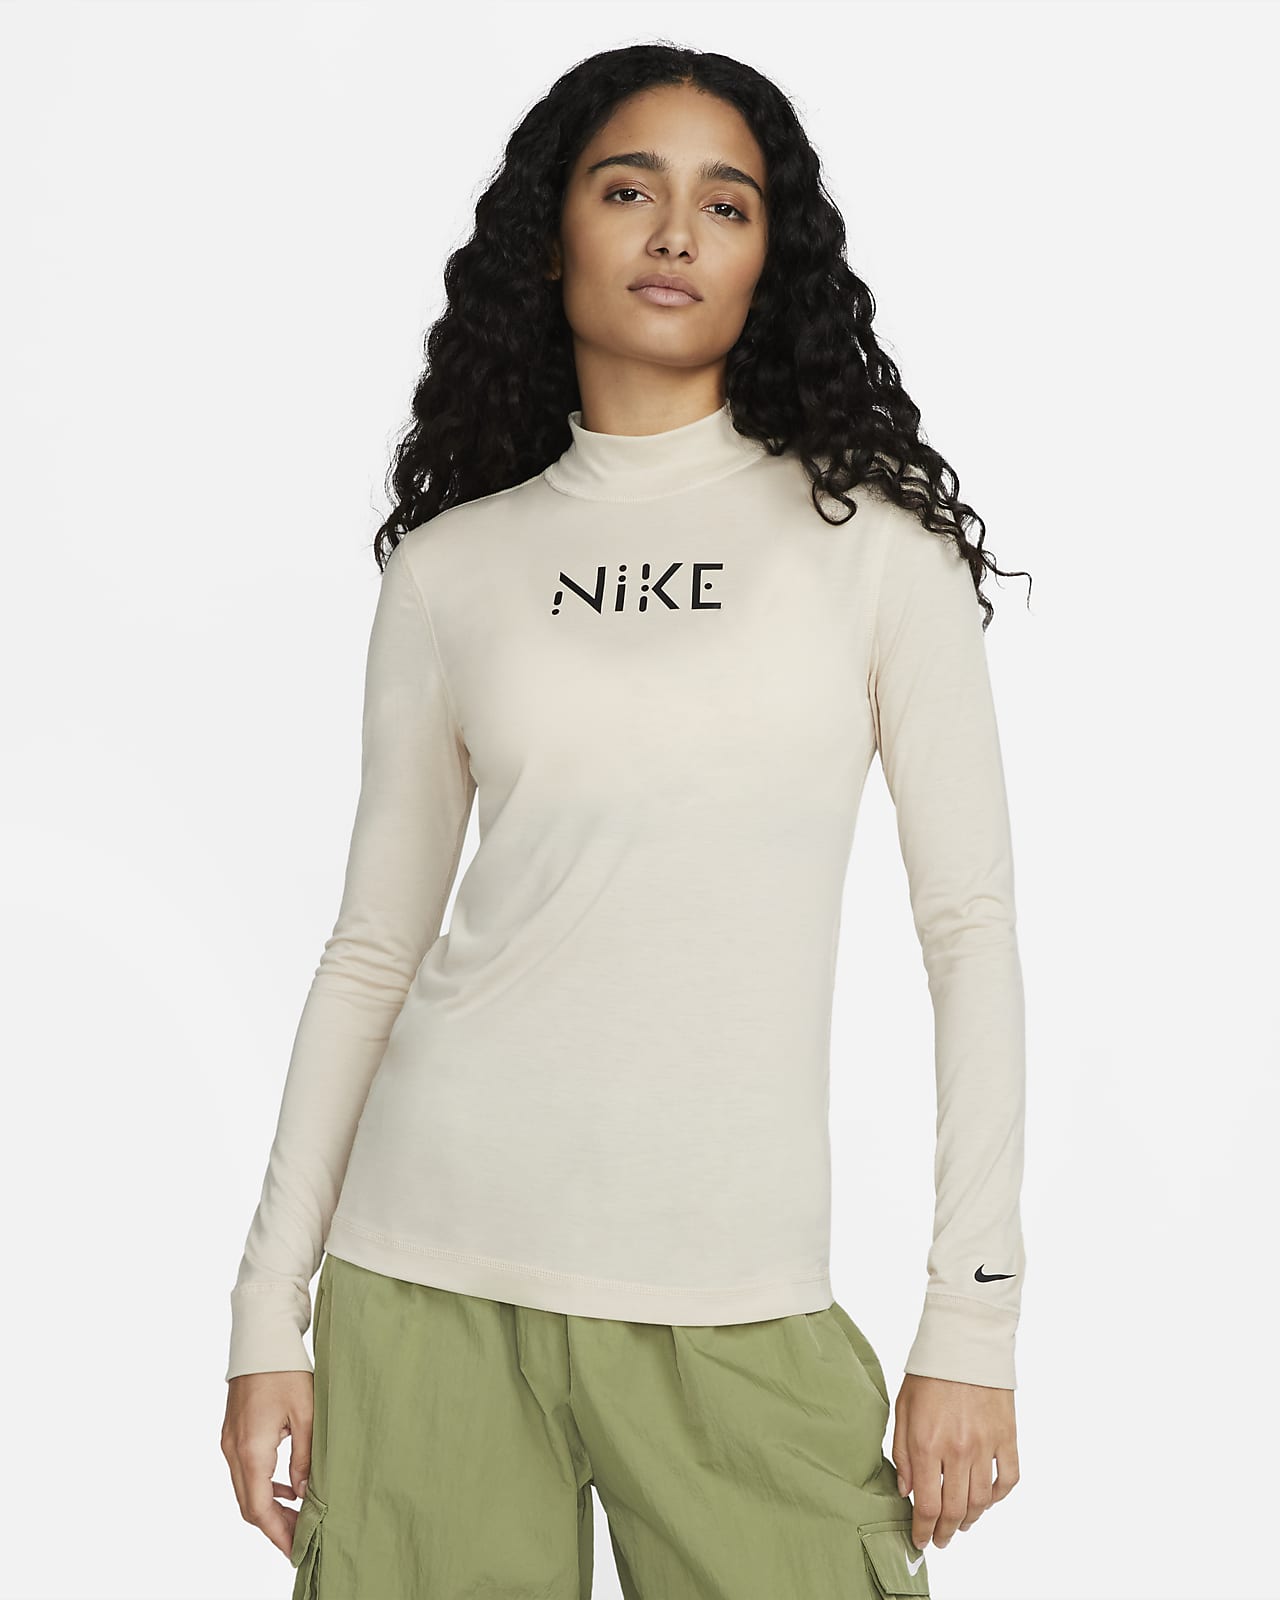 Williams Design Crew Women's Slim-Fit Long-Sleeve T-Shirt. Nike.com